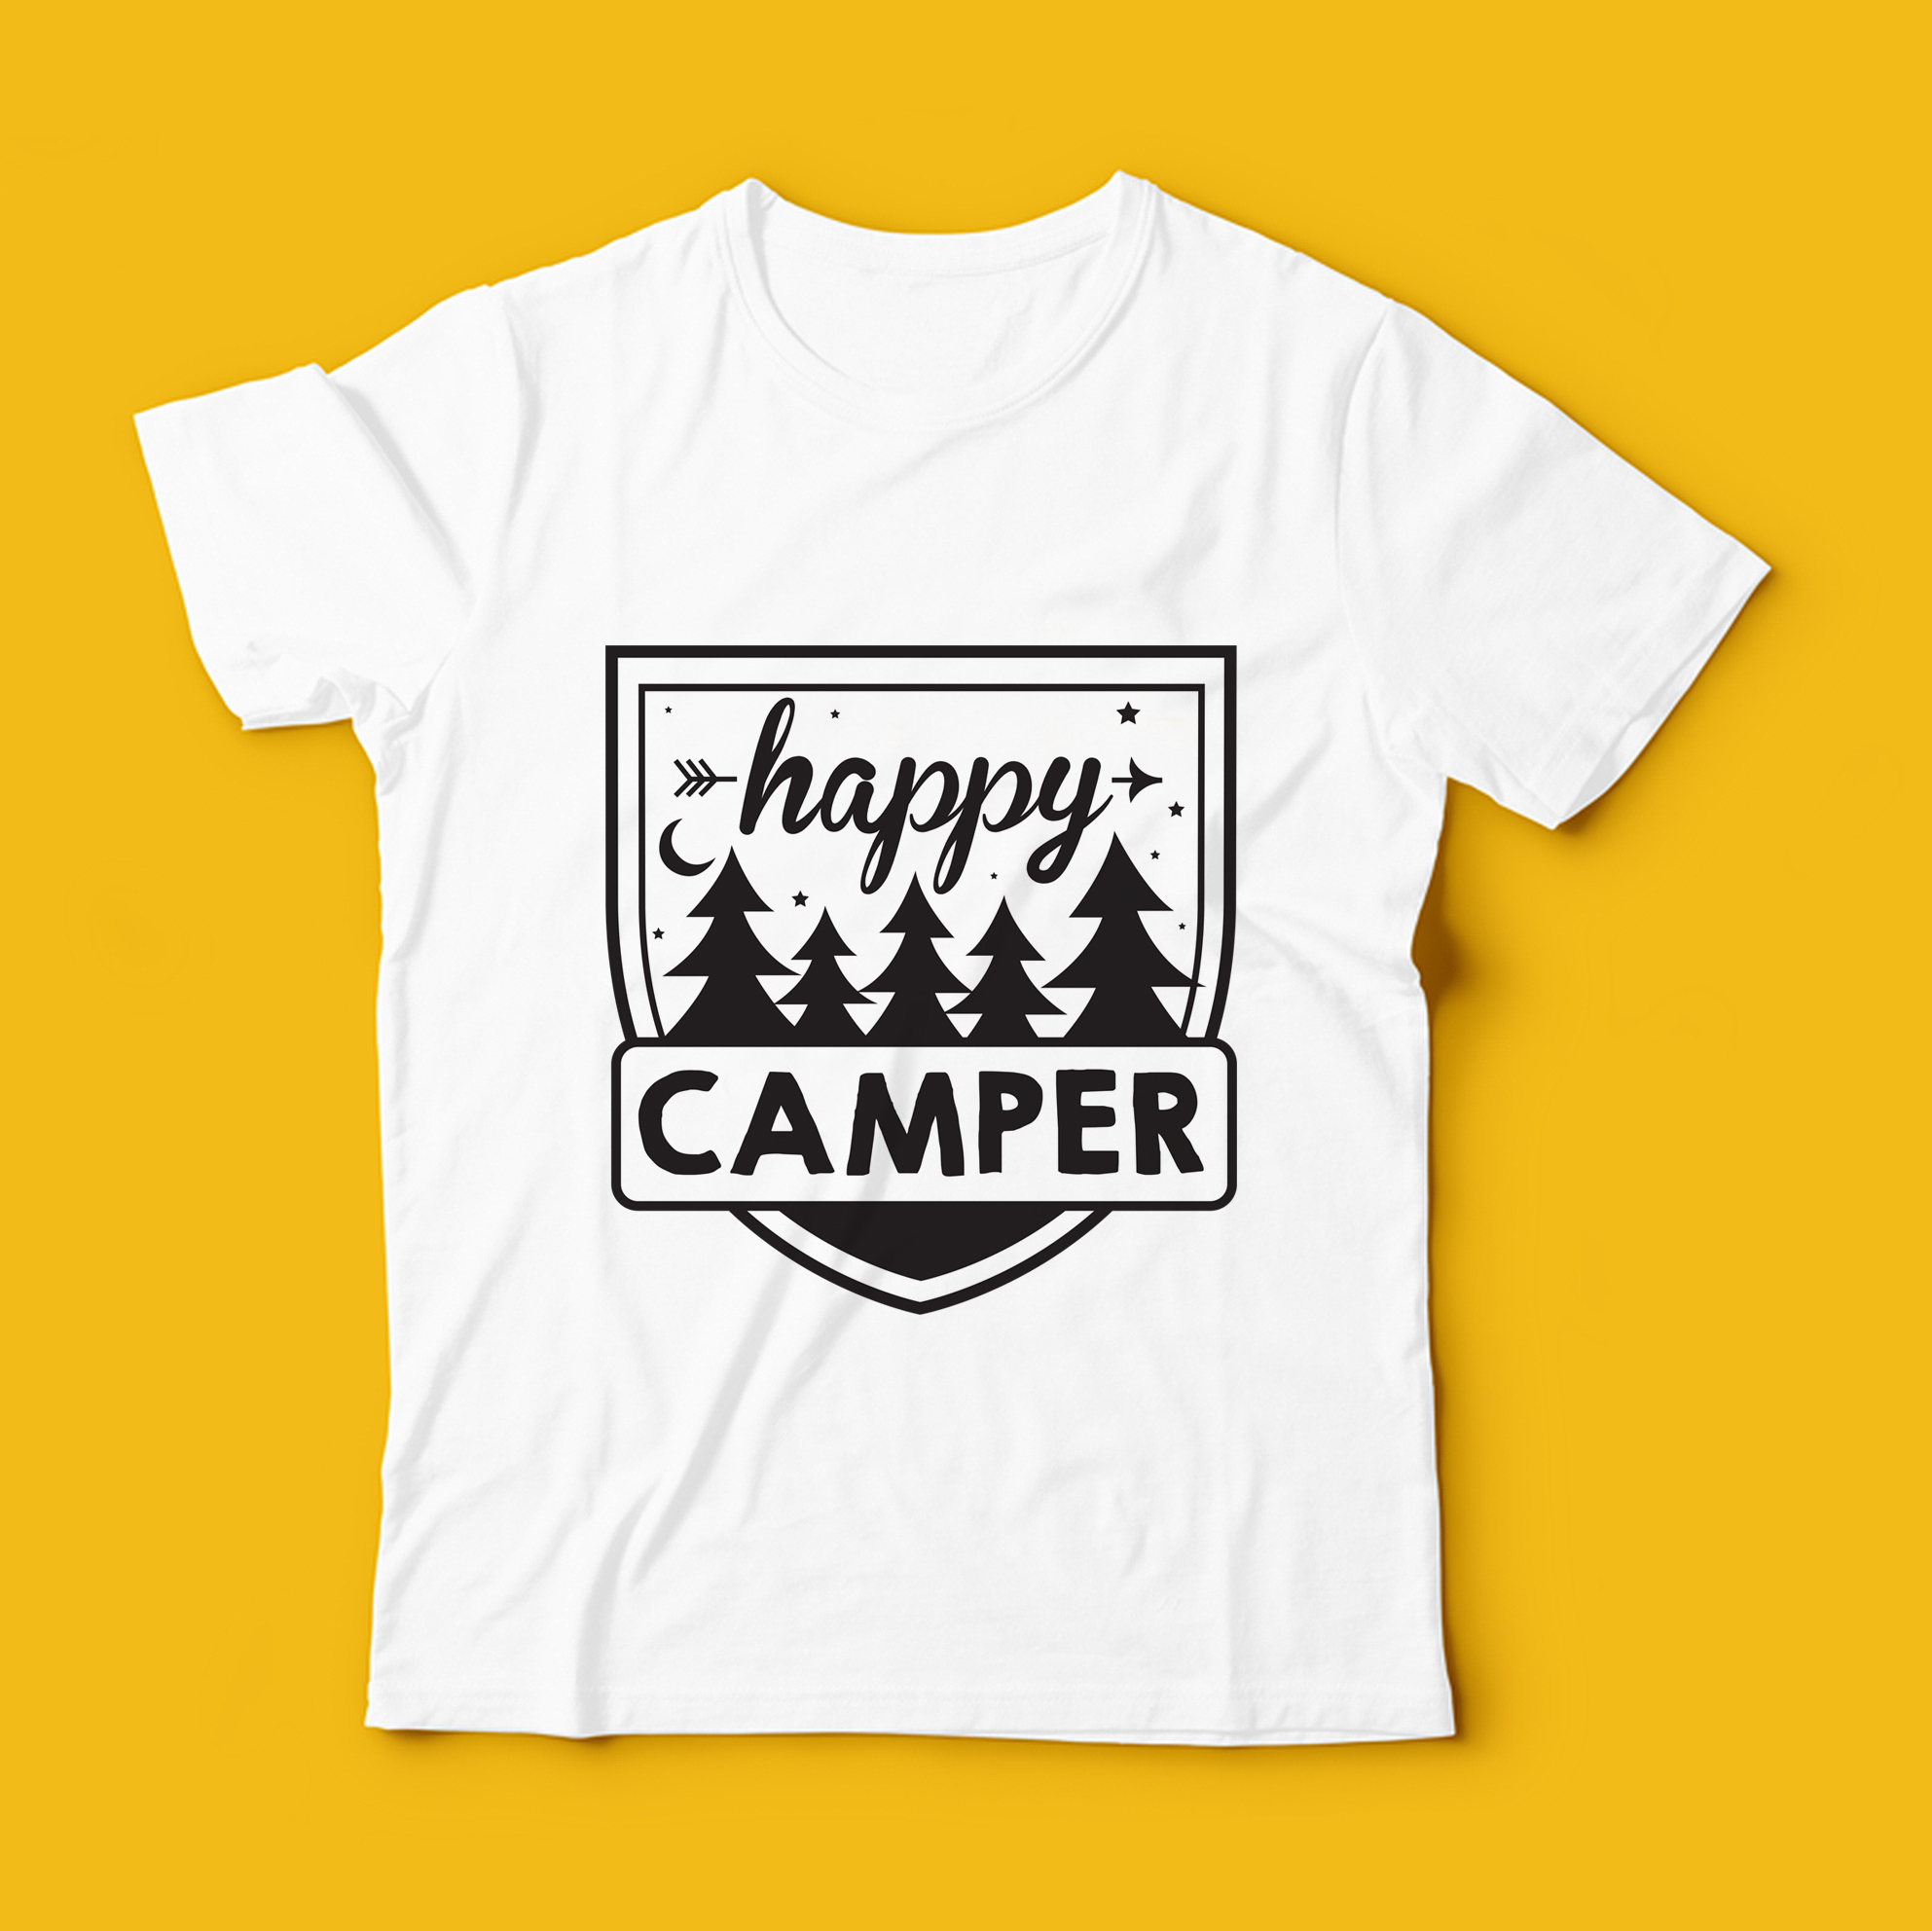 Download Happy Camper T-shirt, mug and tote bag design for SVG cutout template